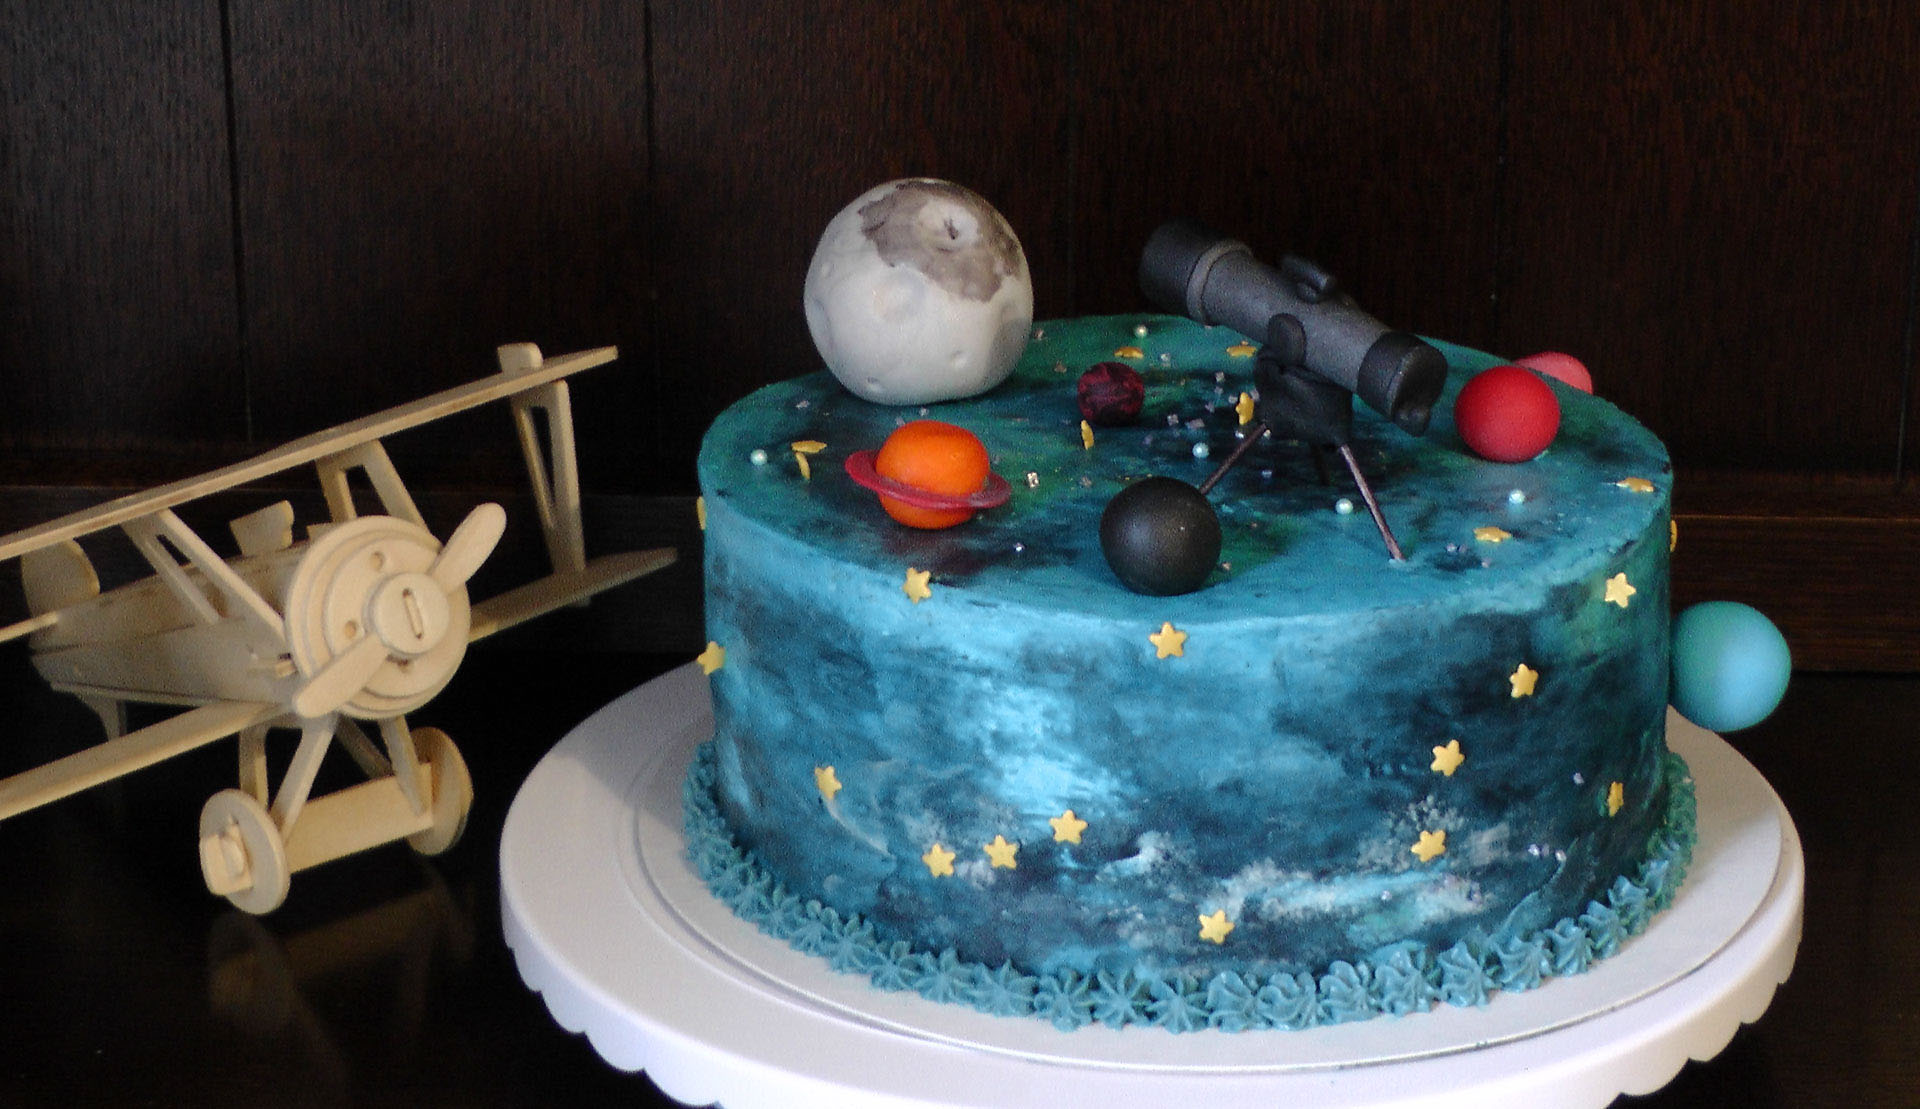 Space lover creative cake idea